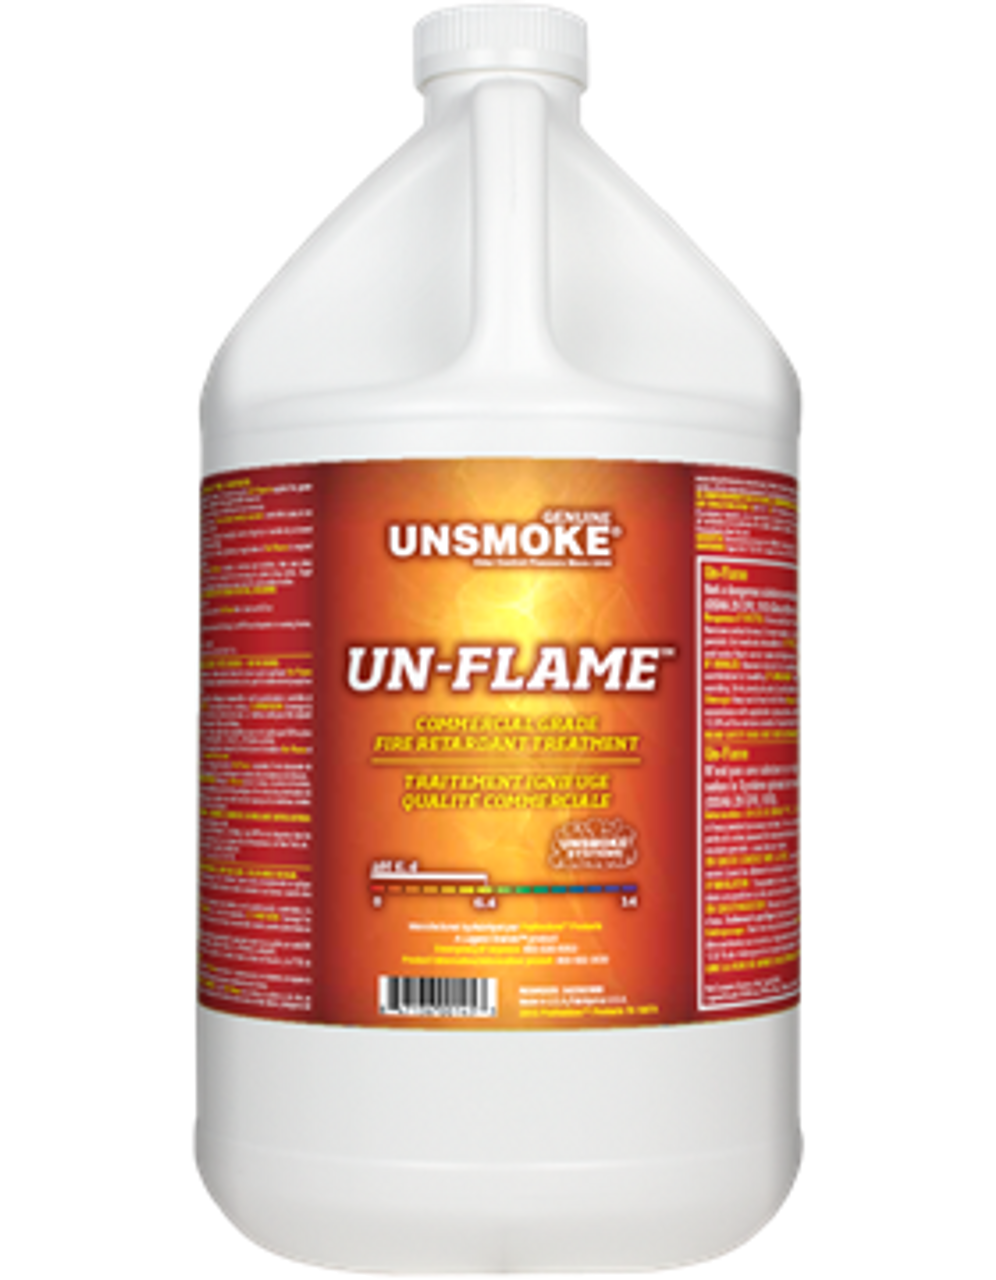 Unsmoke Un-Flame Commercial Grade Fire Retardant Treatment  - 1gal